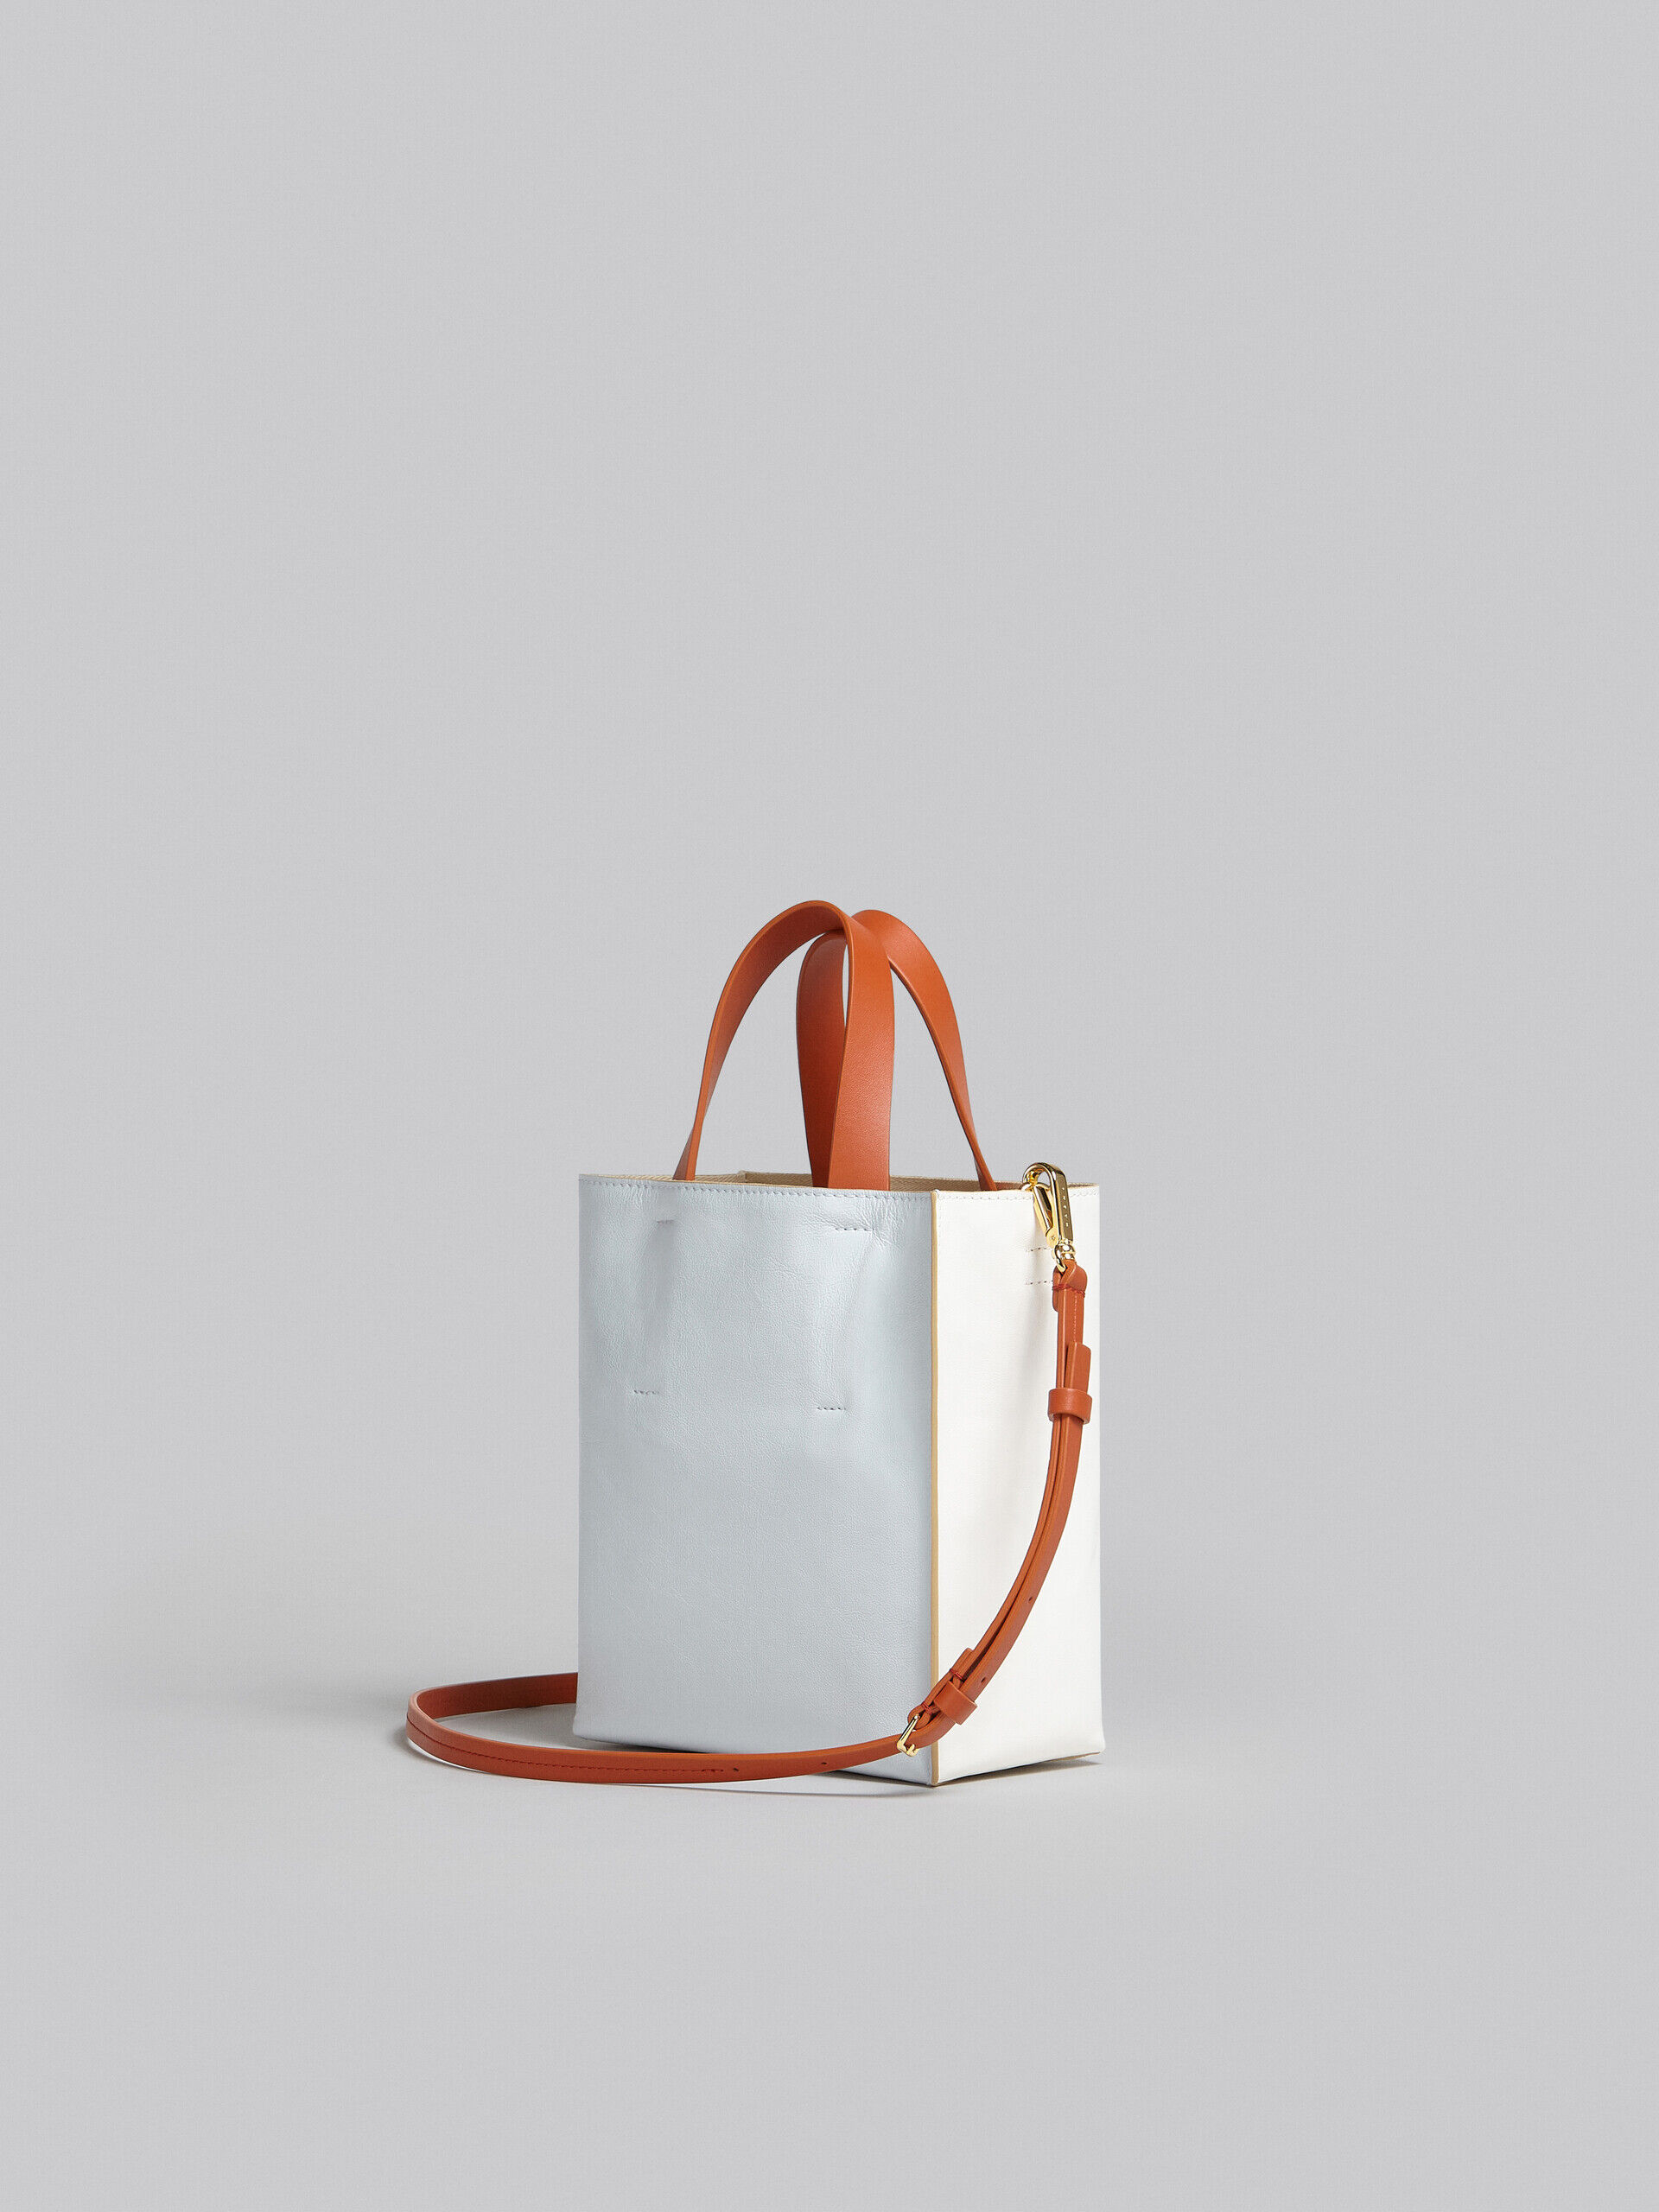 Museo Soft Mini Bag in white light blue and orange leather | Marni